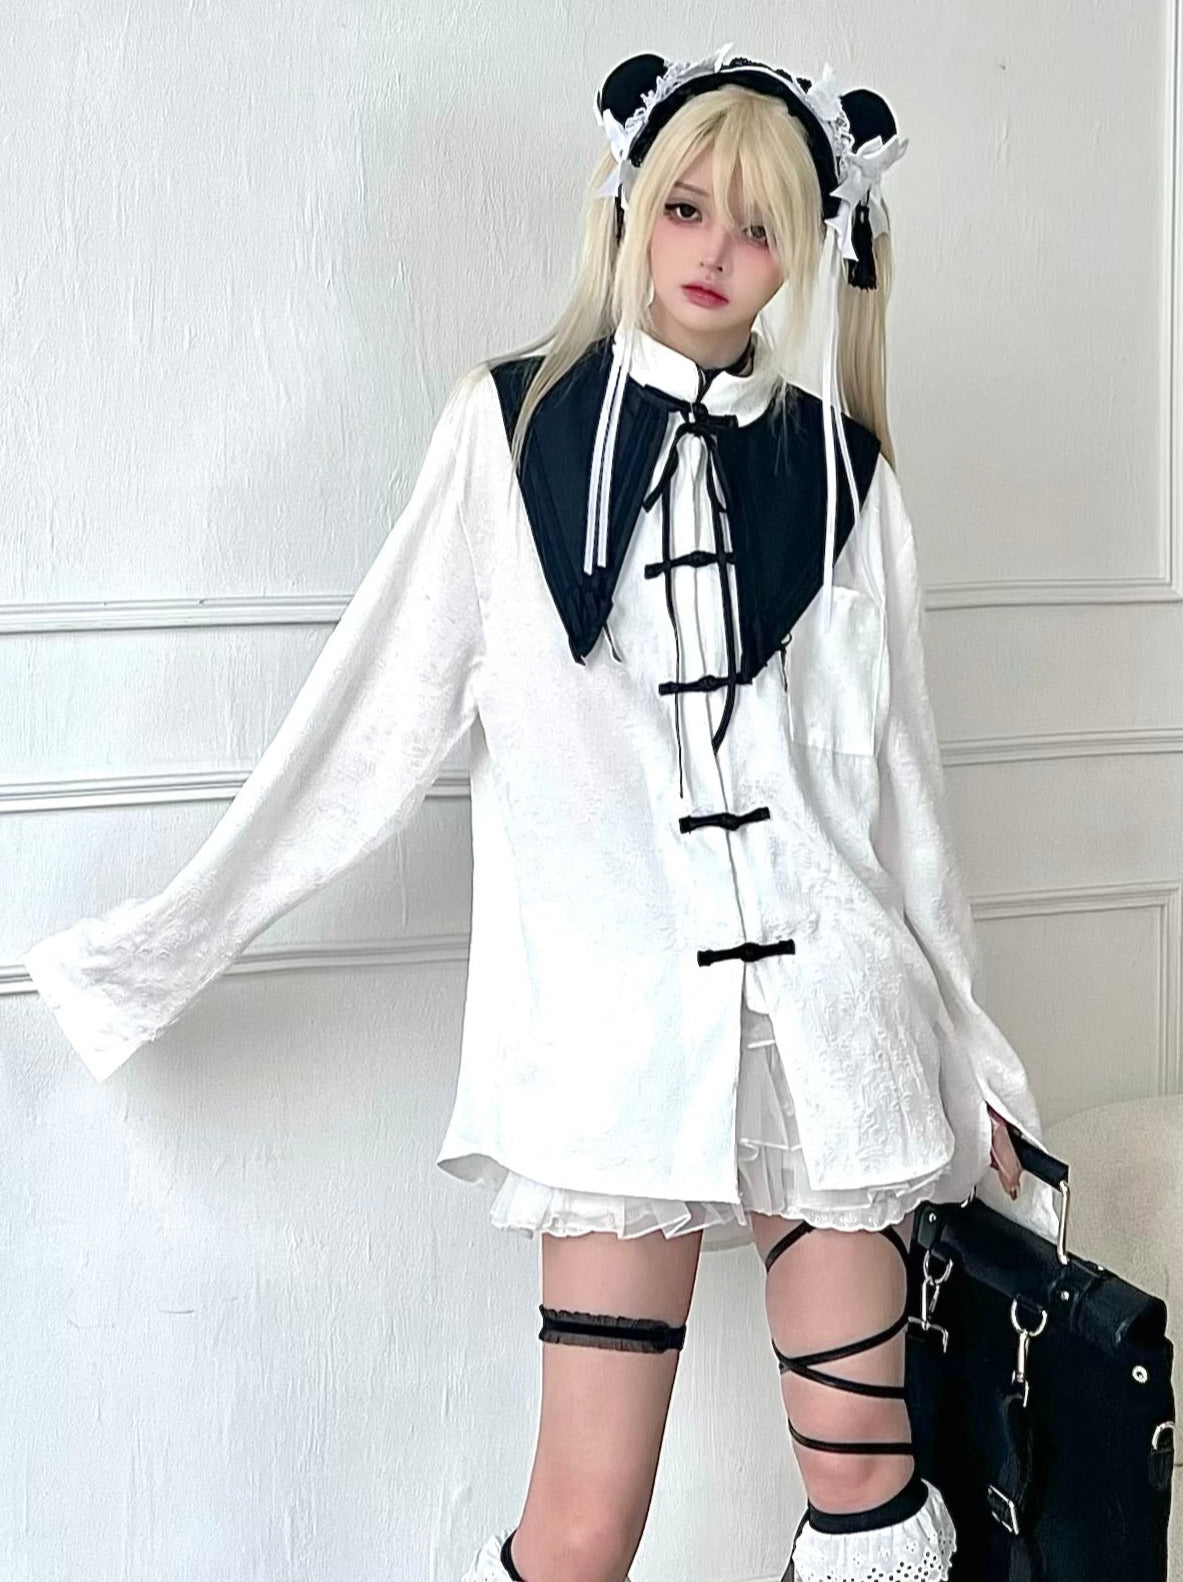 Next-generation/original black and white new Chinese dark pattern girl's long and short sleeves loose buckle belt waist shirt